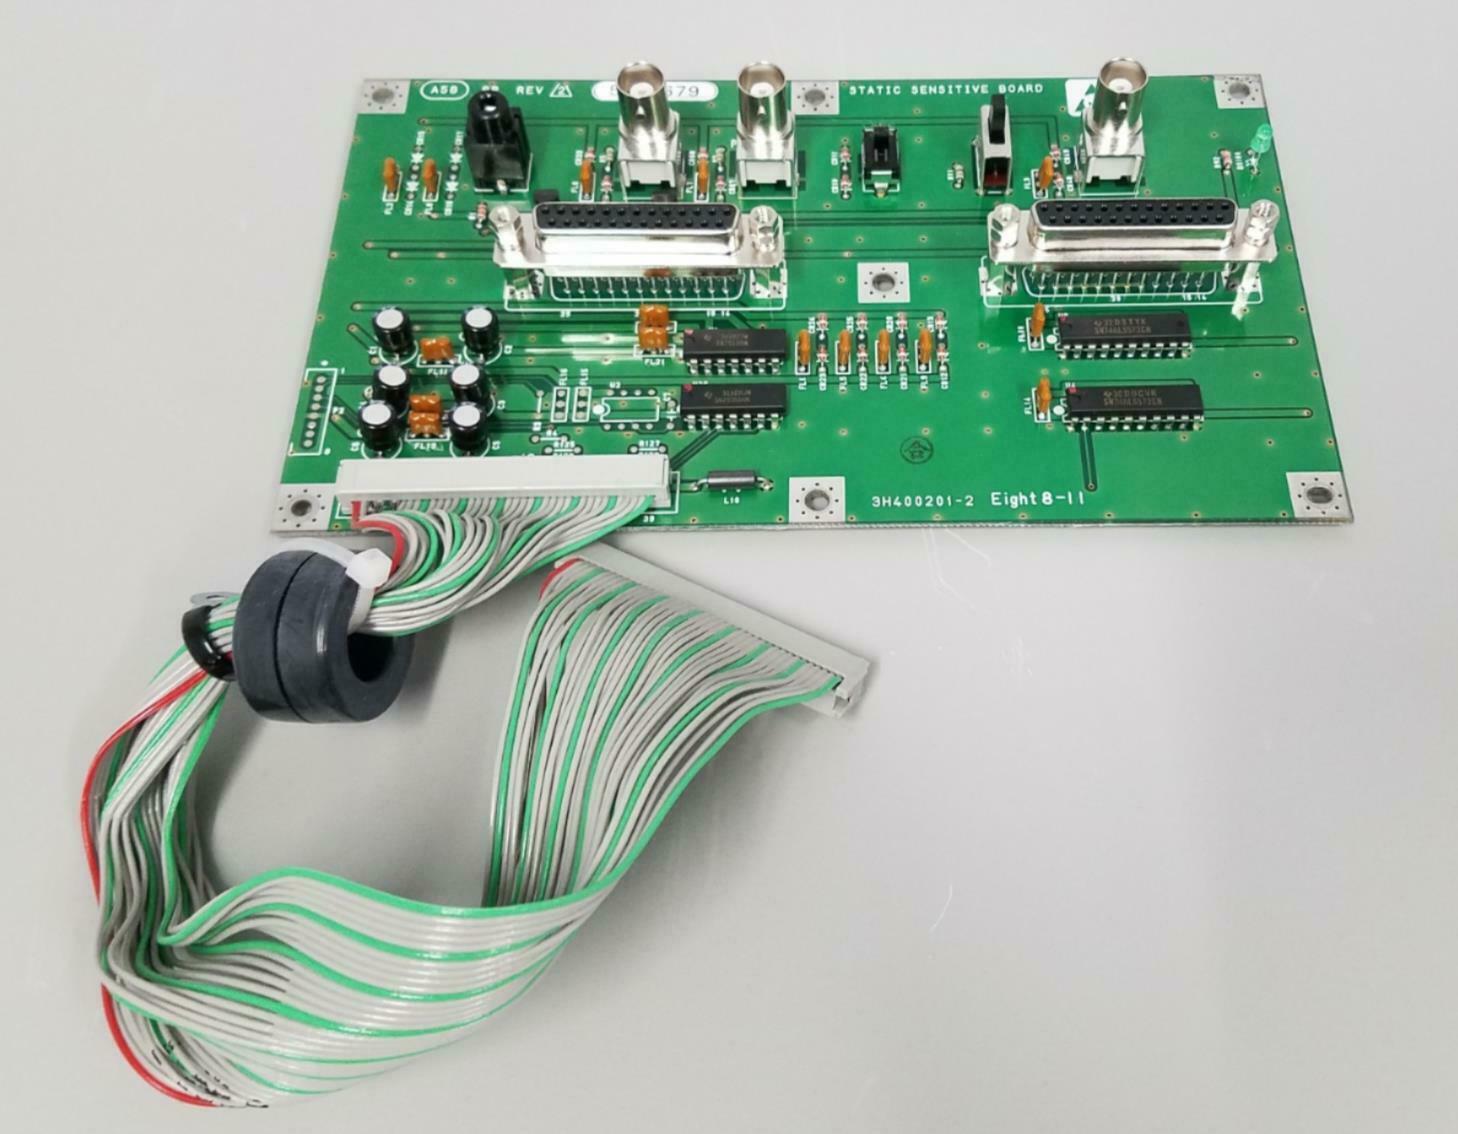 Siemens Ultrasound Sonoline Adara 3H400201-2 Rev 2 Rear Panel DIAGNOSTIC ULTRASOUND MACHINES FOR SALE